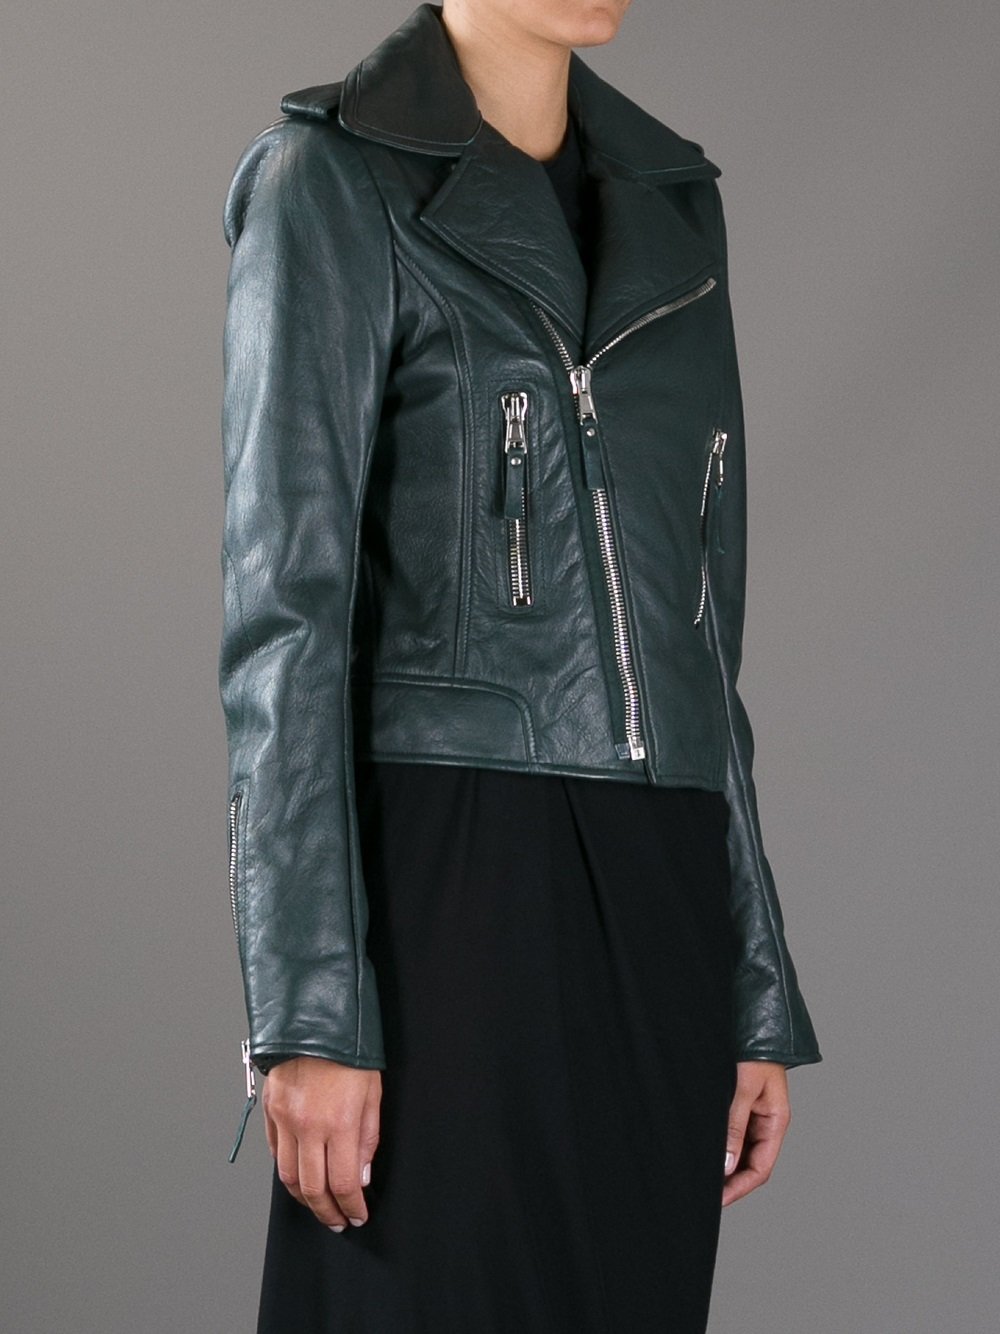 Lyst - Balenciaga Leather Jacket in Green